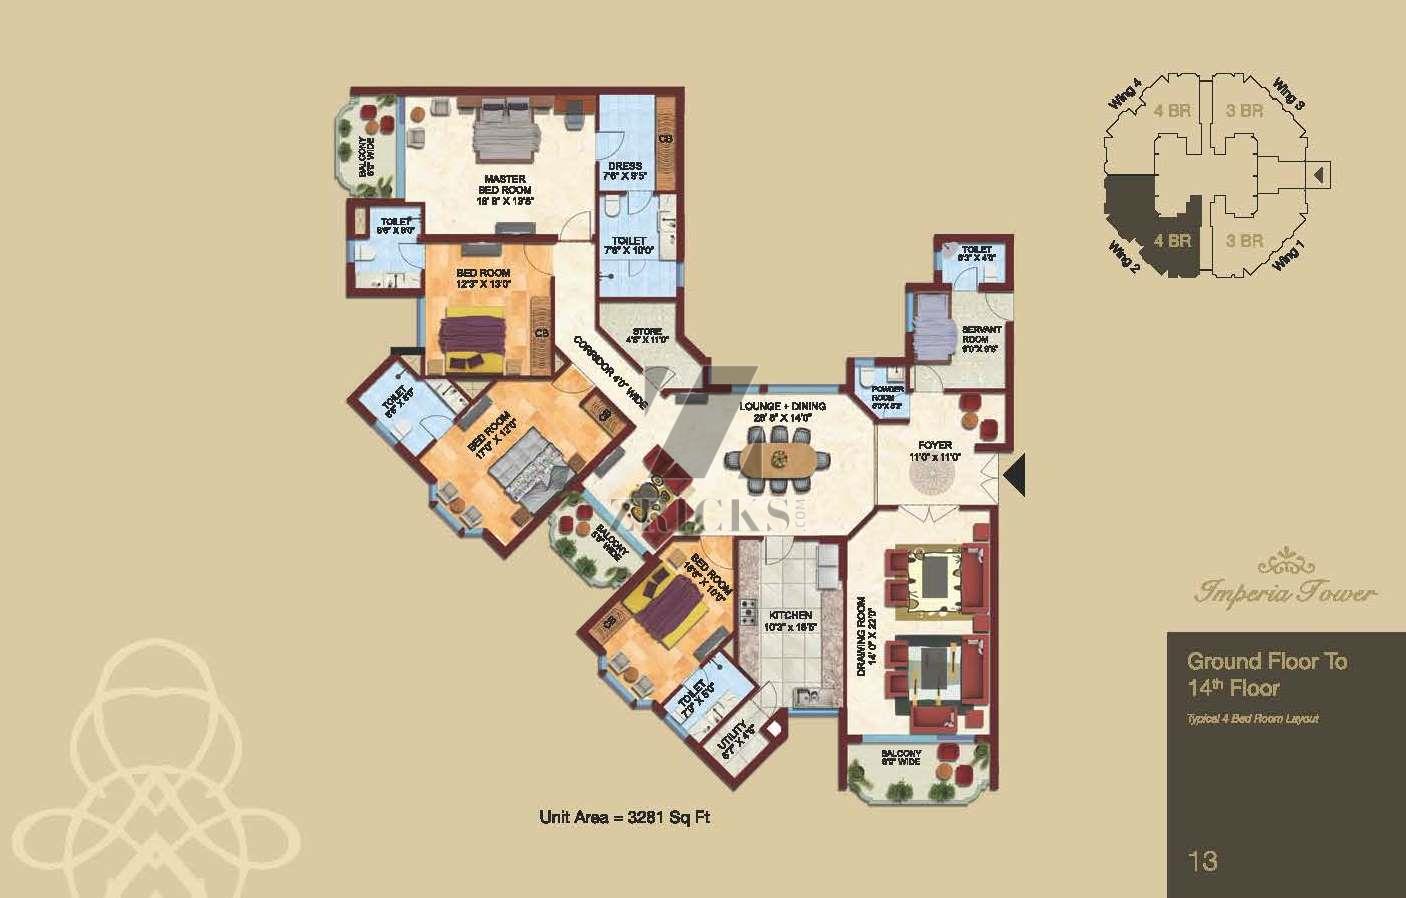 BNB Imperia Tower Floor Plan